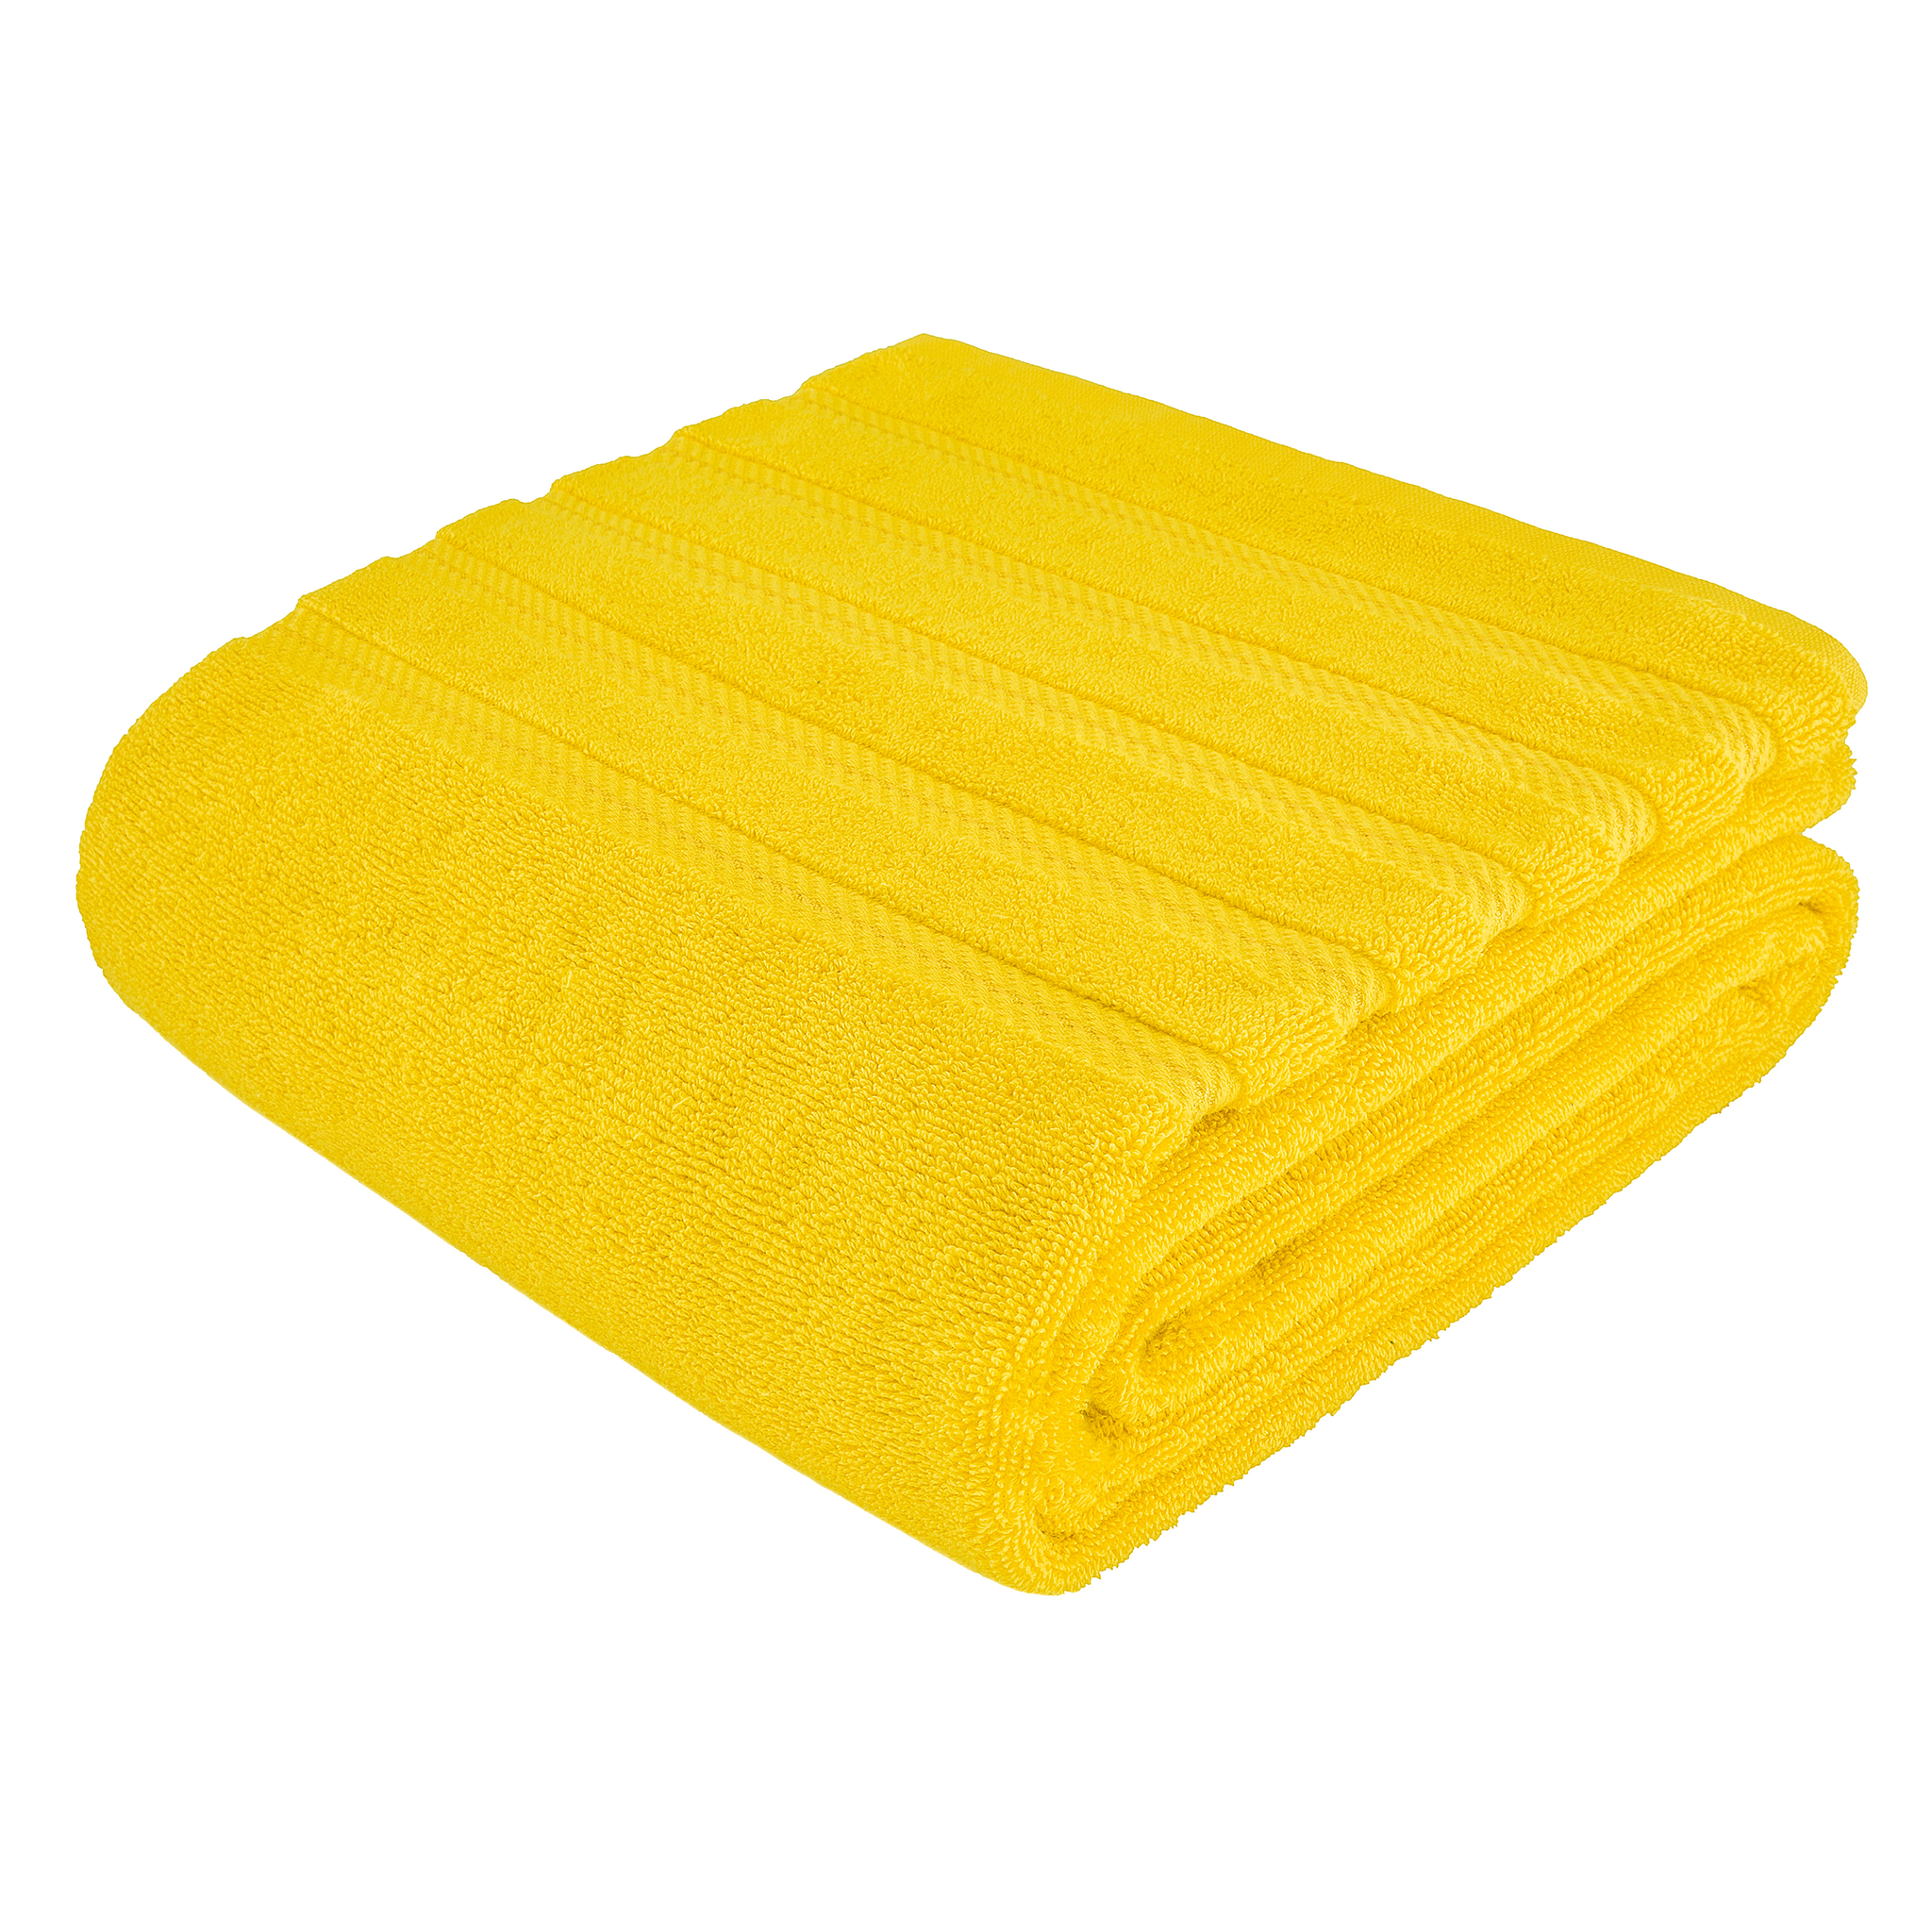 American Soft Linen - 35x70 Jumbo Bath Sheet Turkish Bath Towel - 16 Piece Case Pack - Yellow - 7